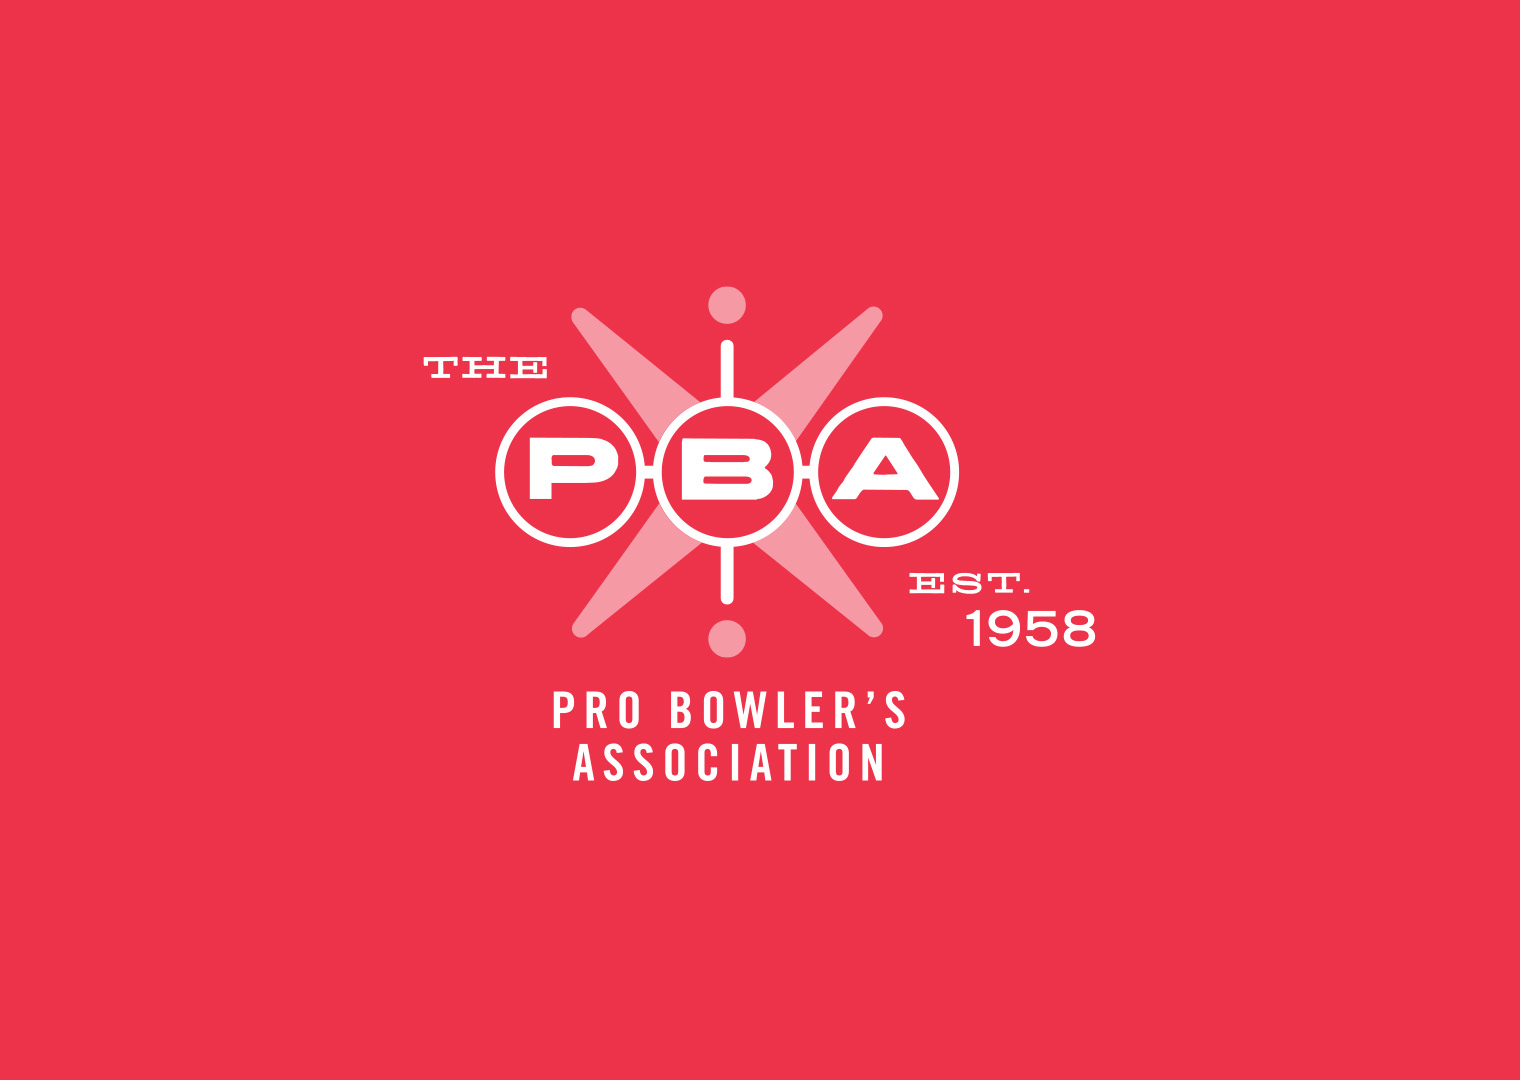 Pro Bowler's Association logo